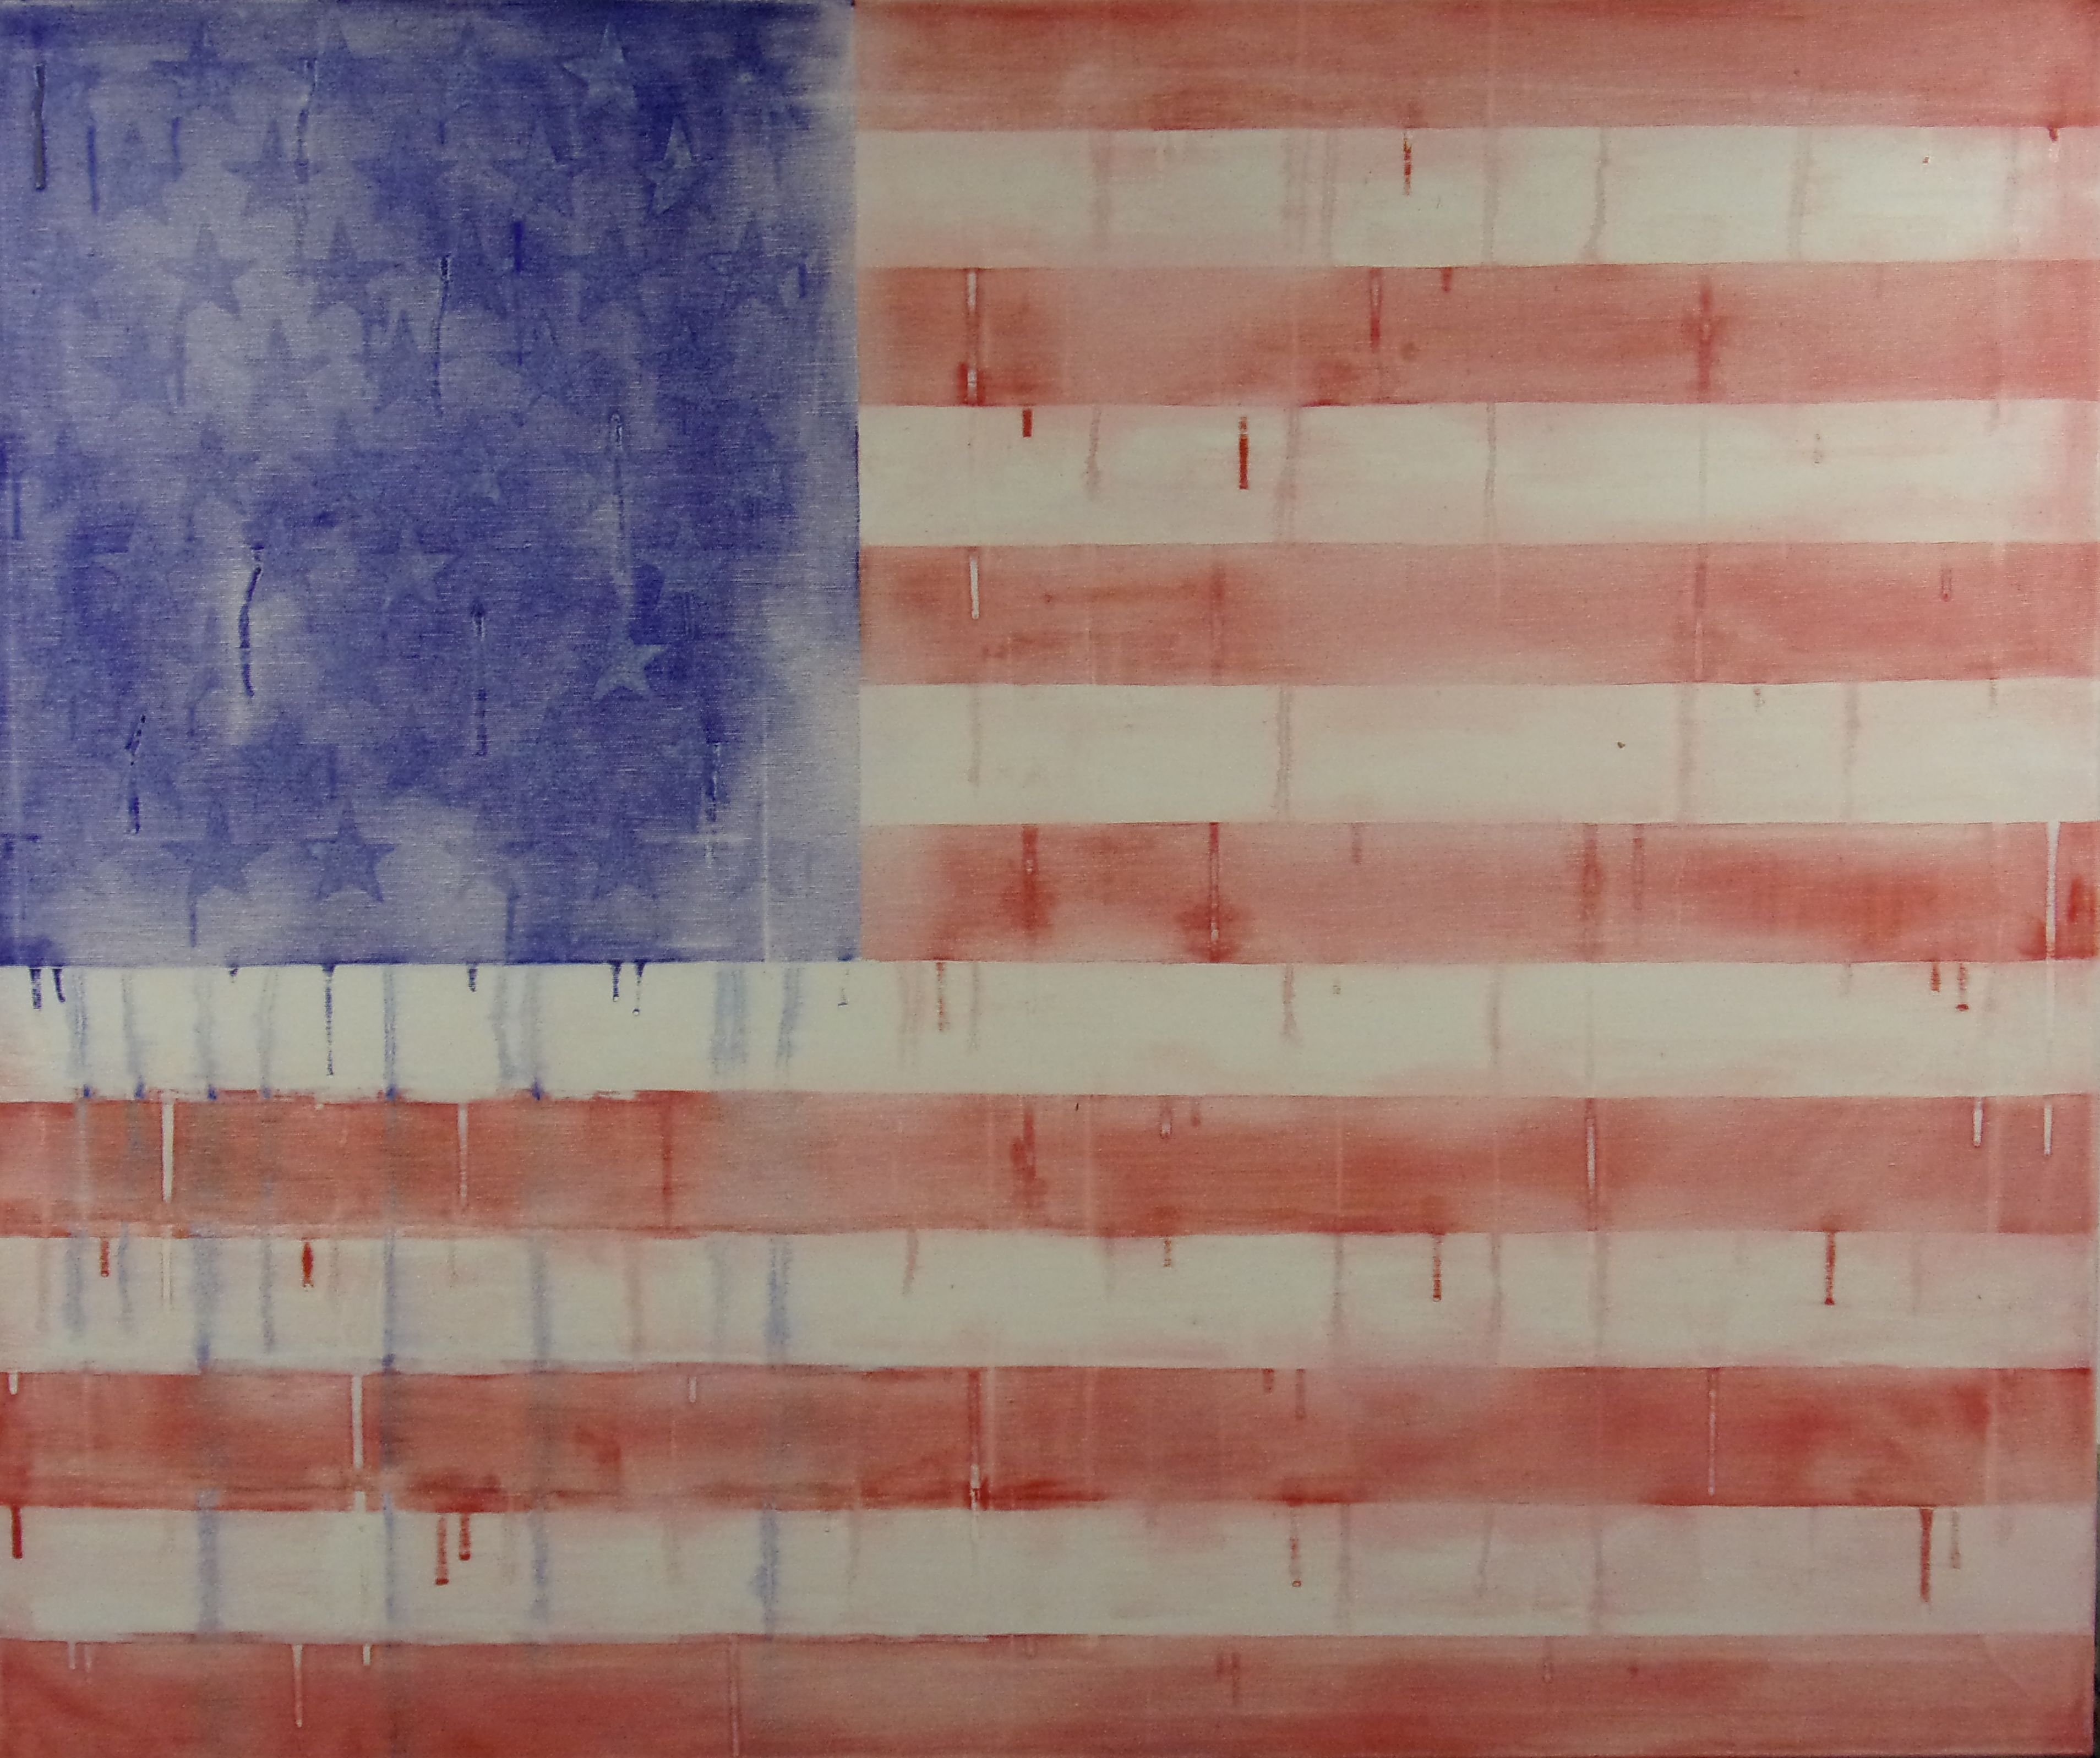 Downfall of USA United Tears of America Oil painting on canvas art Verenigde Tranen van Amerika